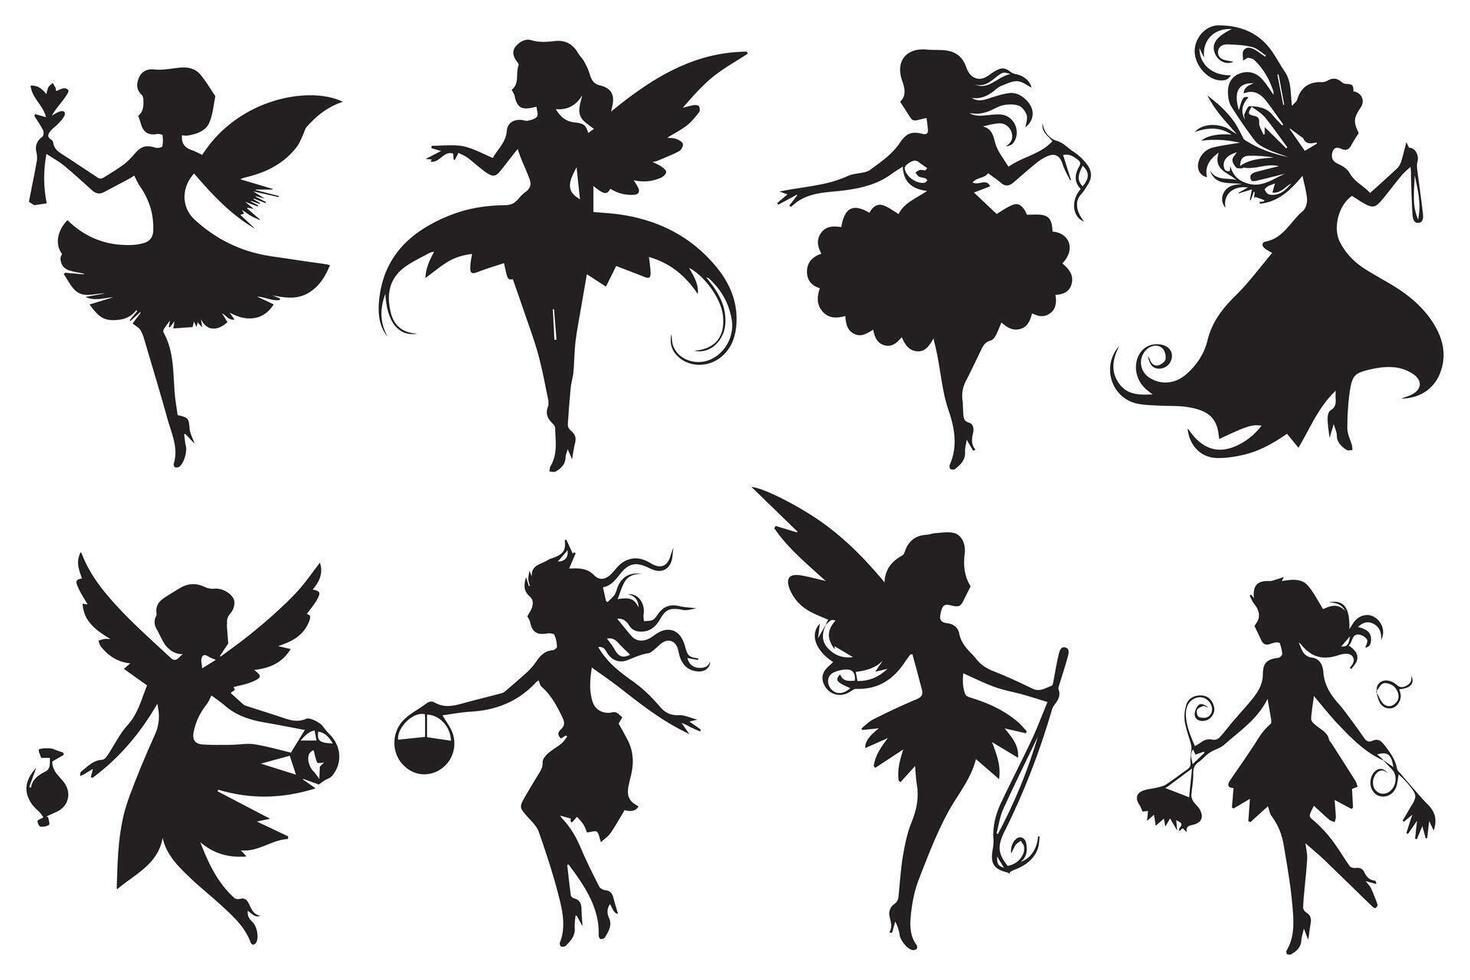 Fairy silhouette illustration set pro design vector